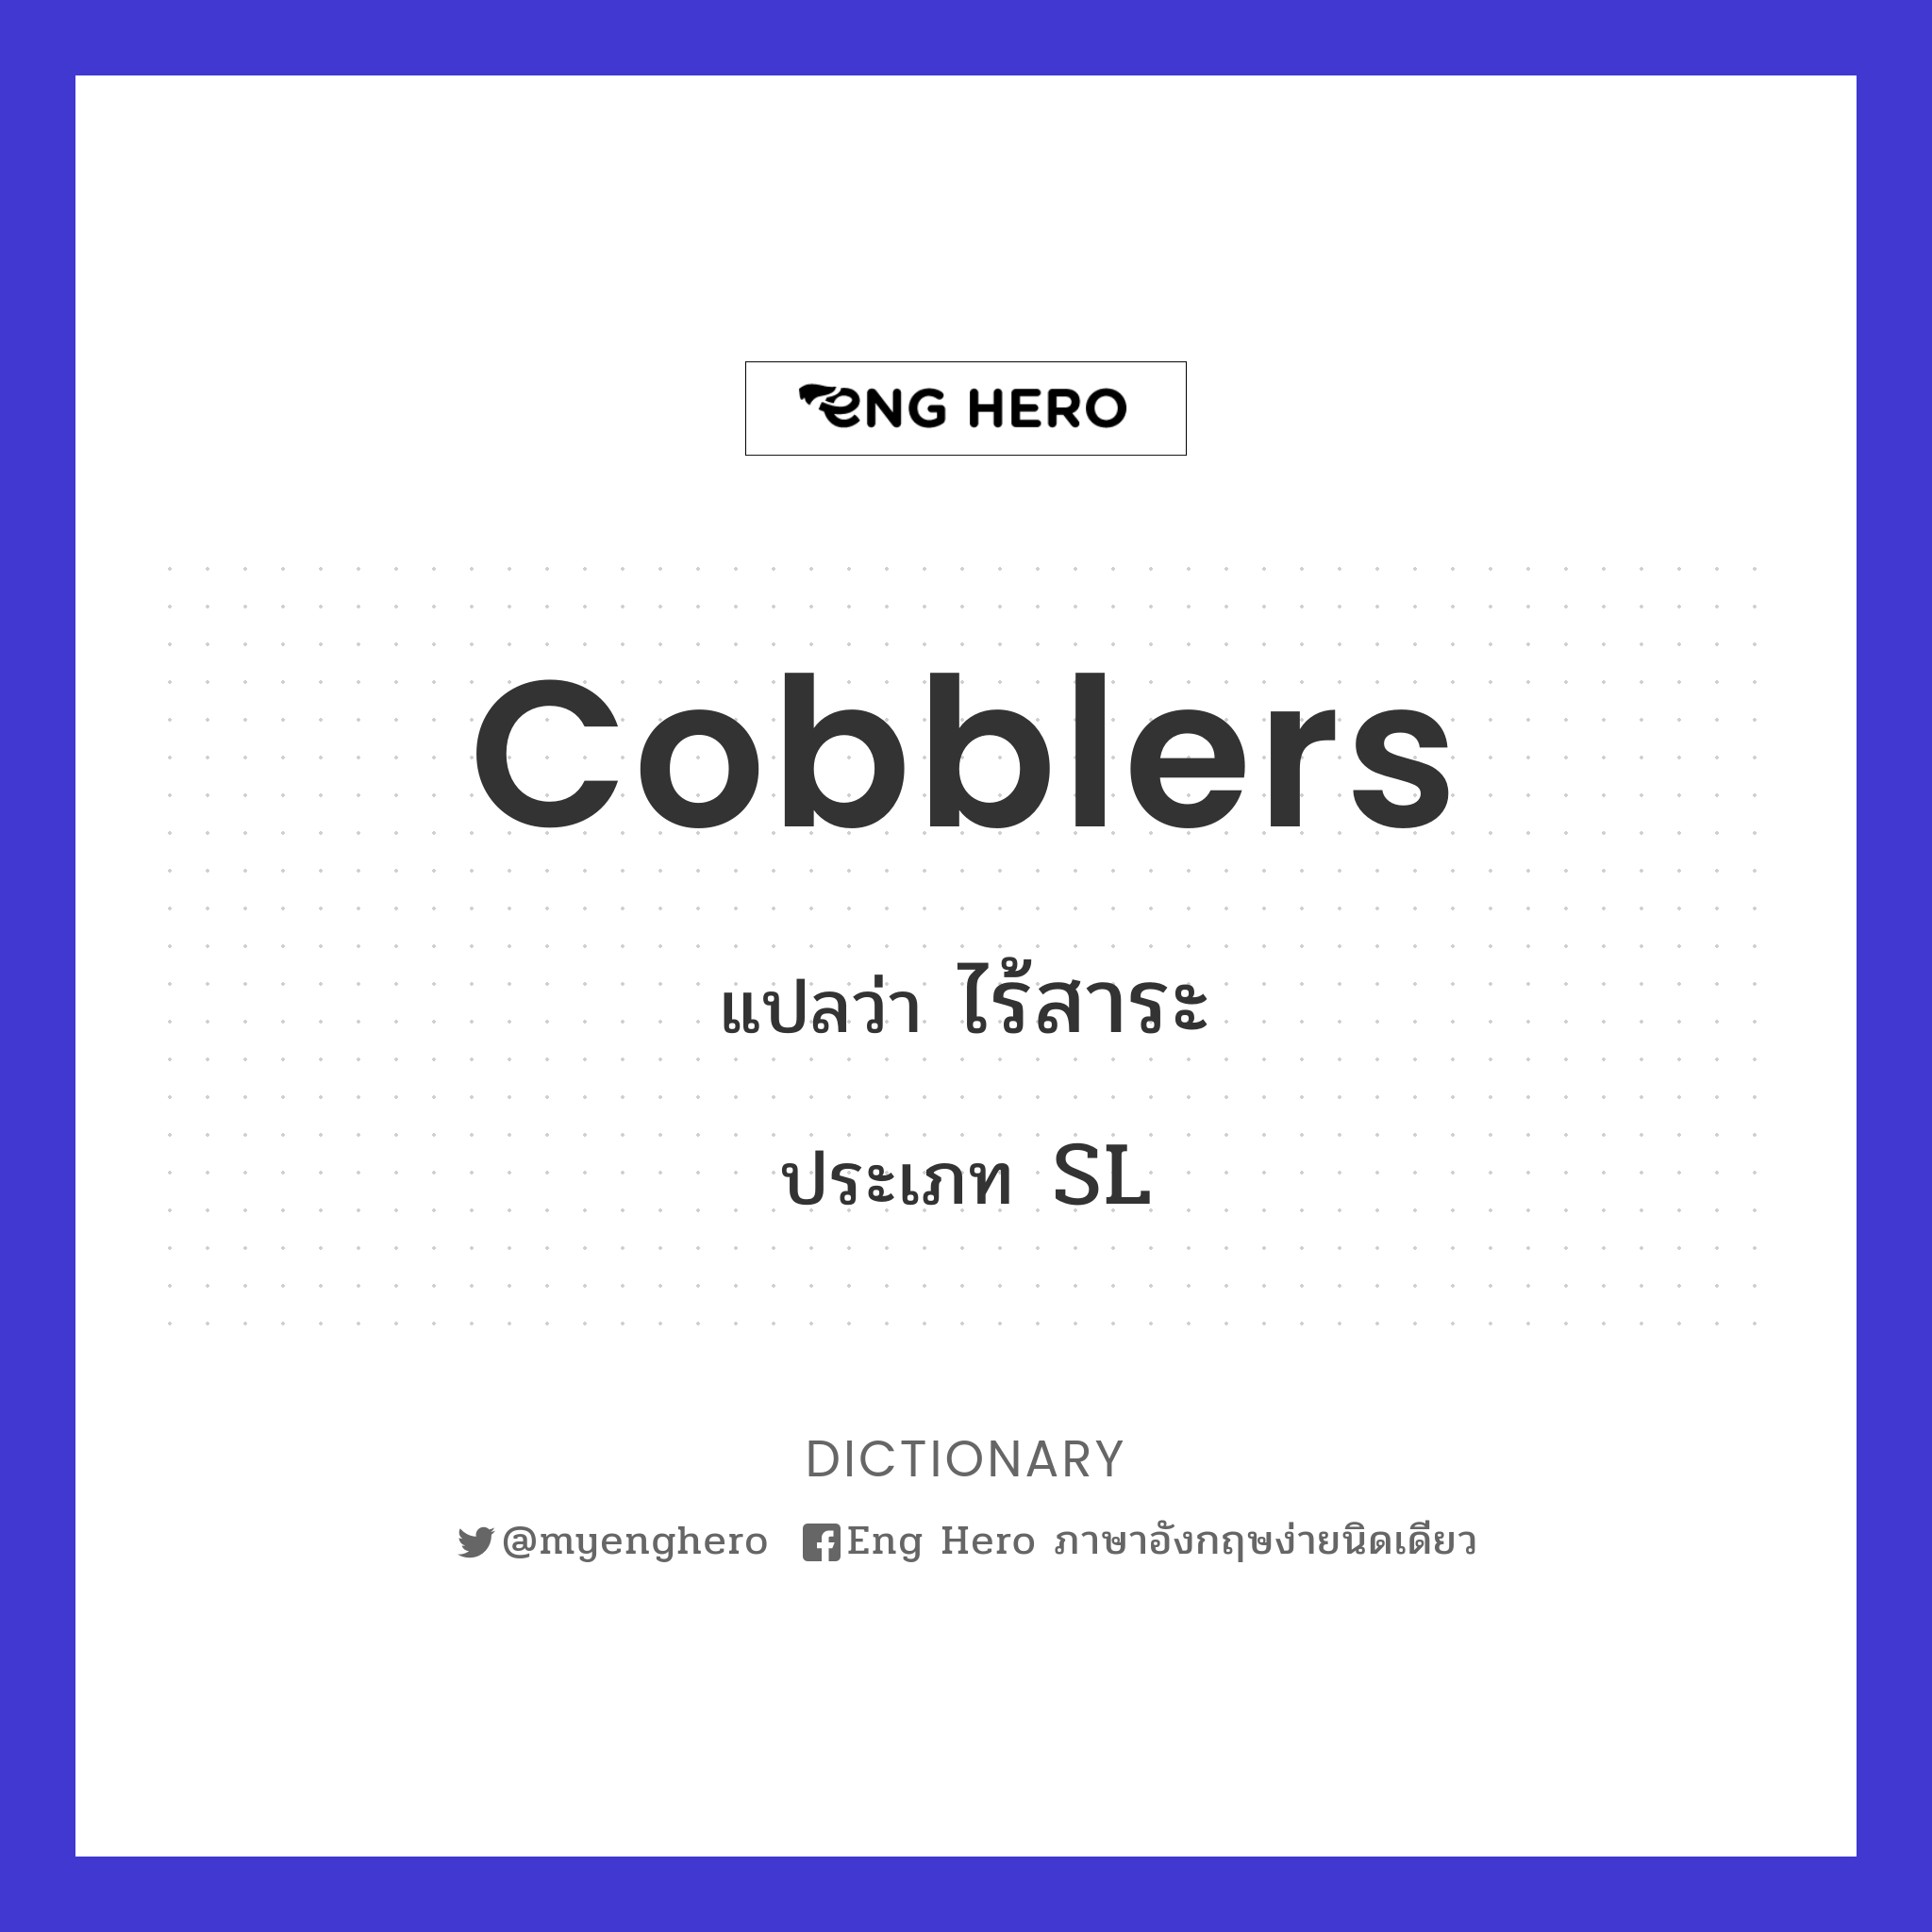 cobblers